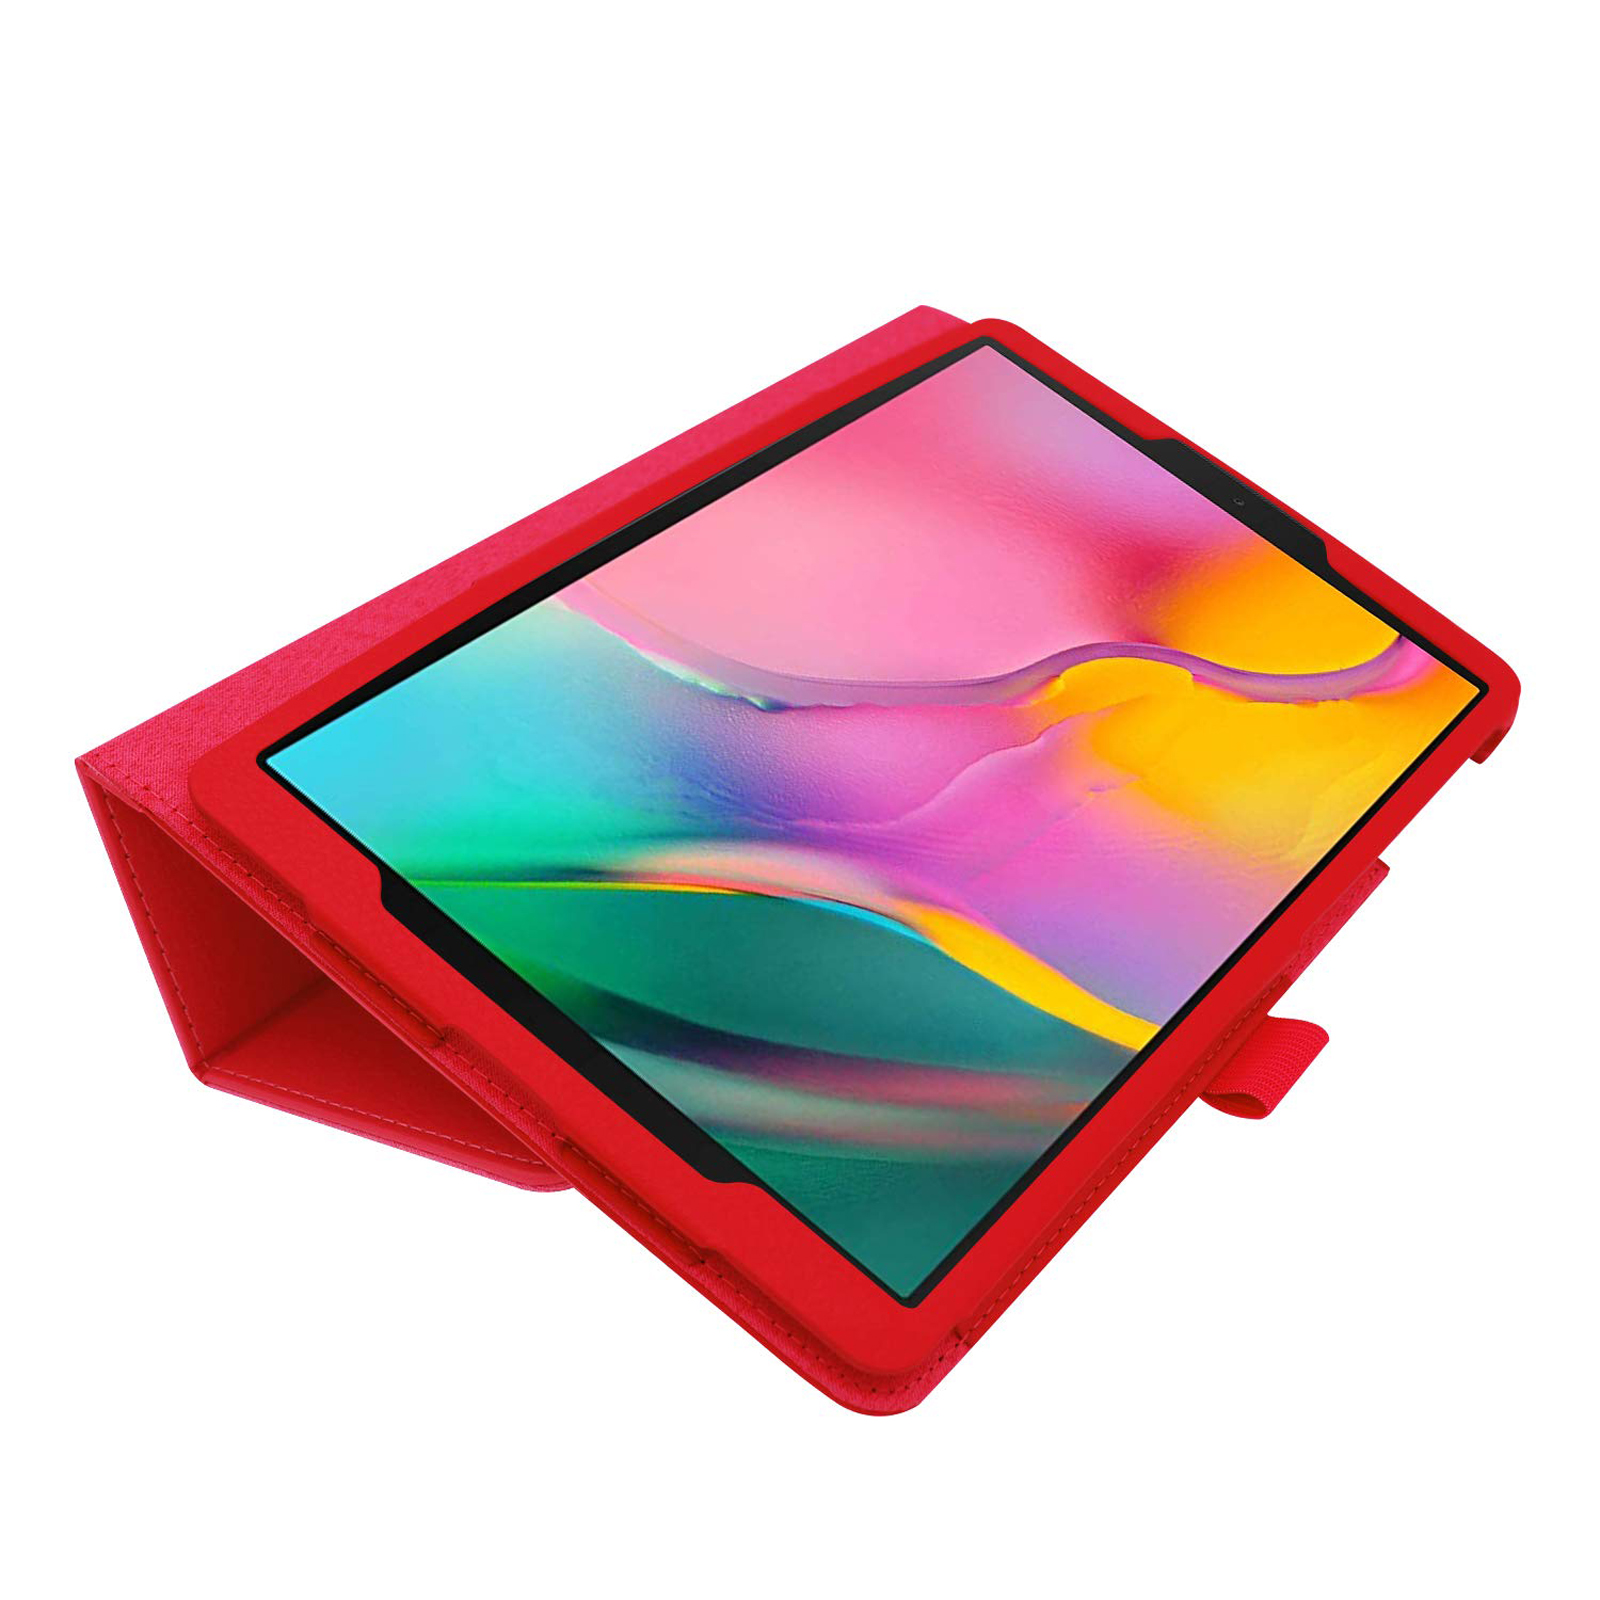 10.1 Samsung Tab Kunstleder, Rot SM-T510 LOBWERK A Hülle für Bookcover Galaxy Zoll Schutzhülle 10.1